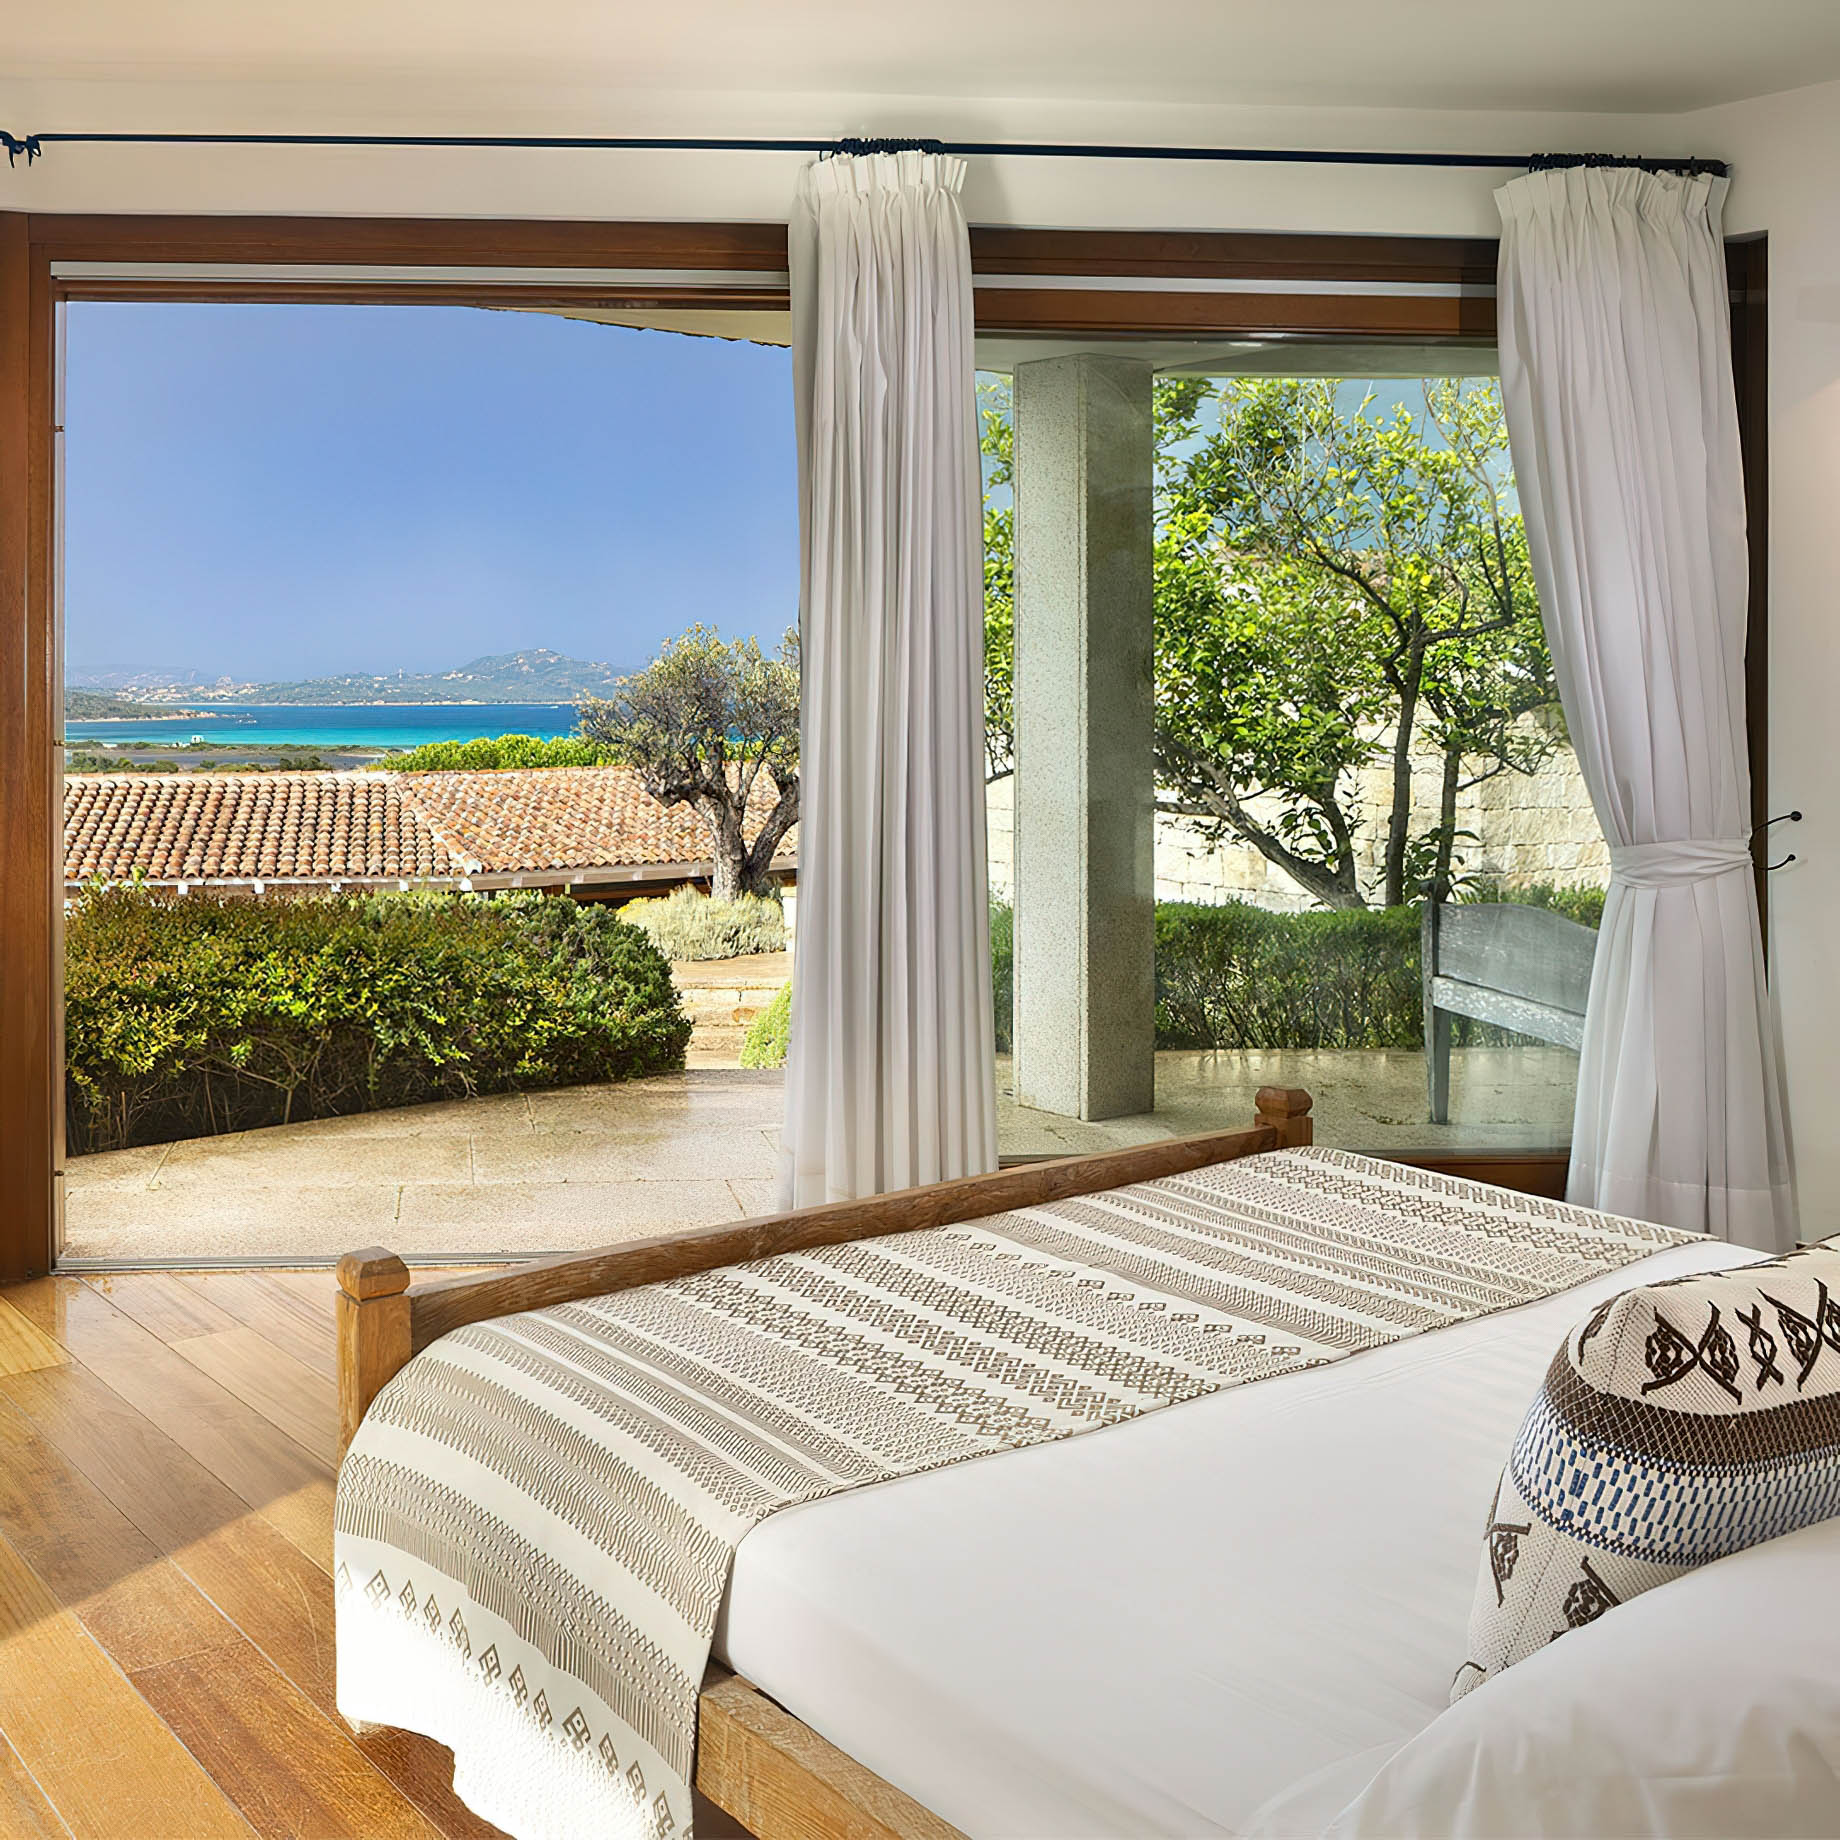 Baglioni Resort Sardinia - San Teodoro, Sardegna, Italy - Villa Le Pernici Bedroom Sea View